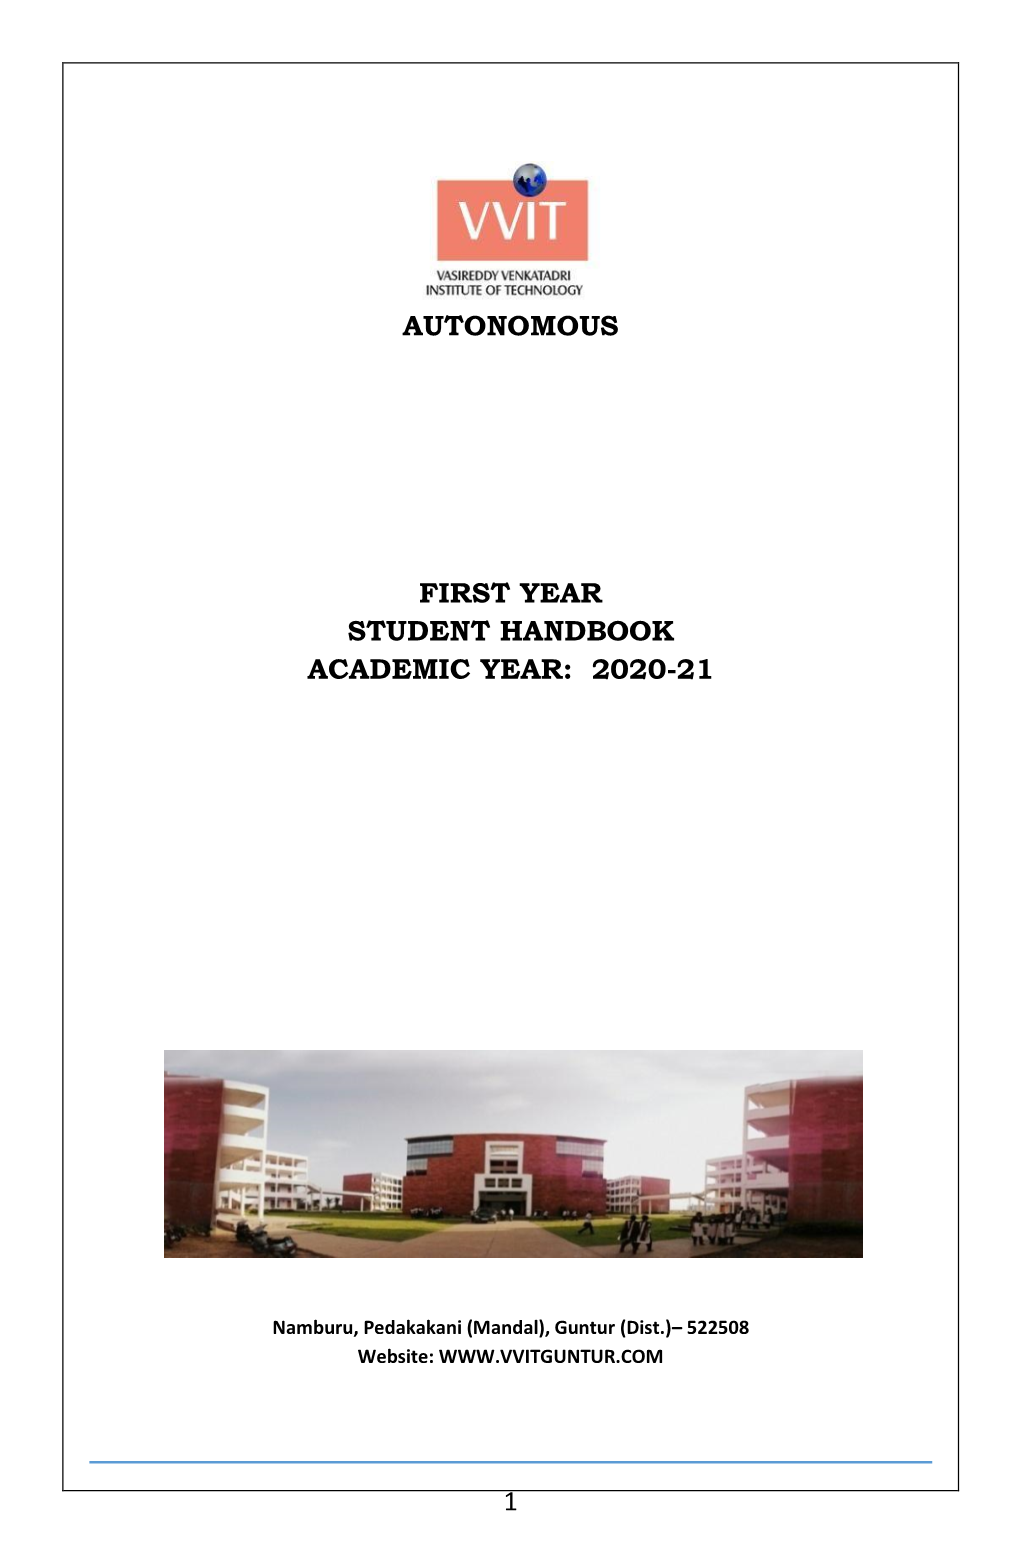 R20 Student Handbook